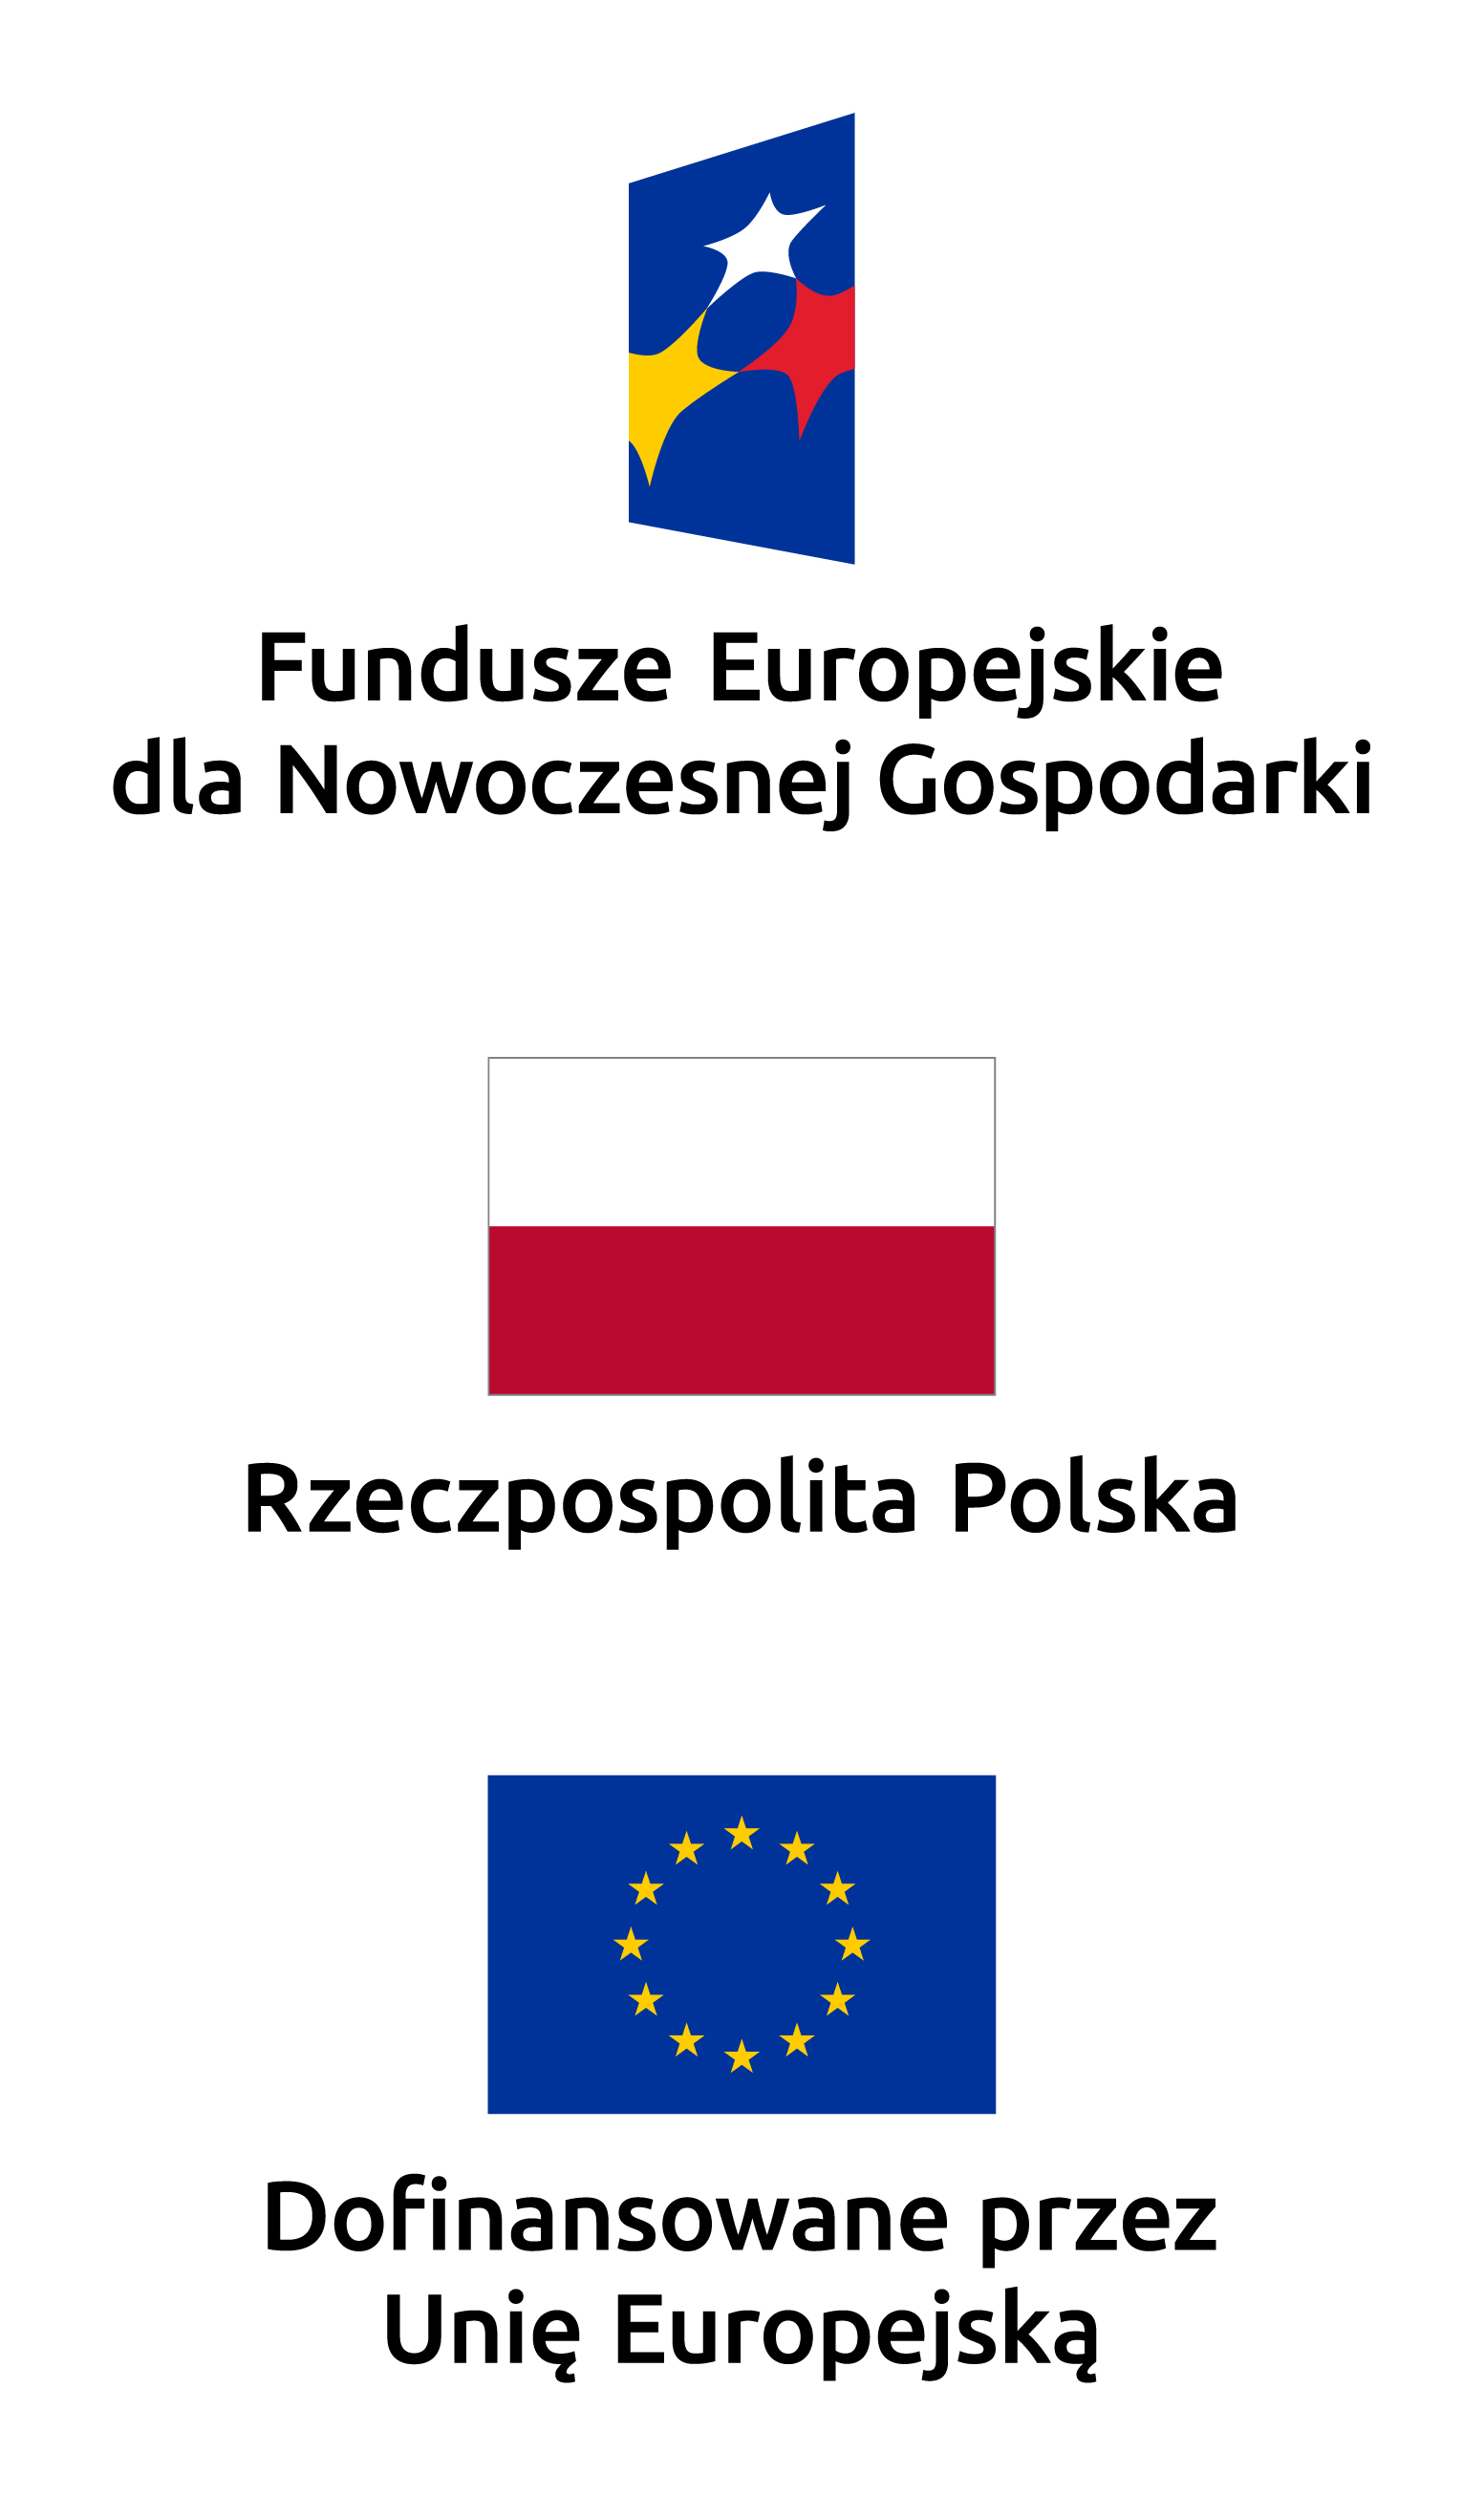 Fundusze unijne, Unia Europejska, Polska